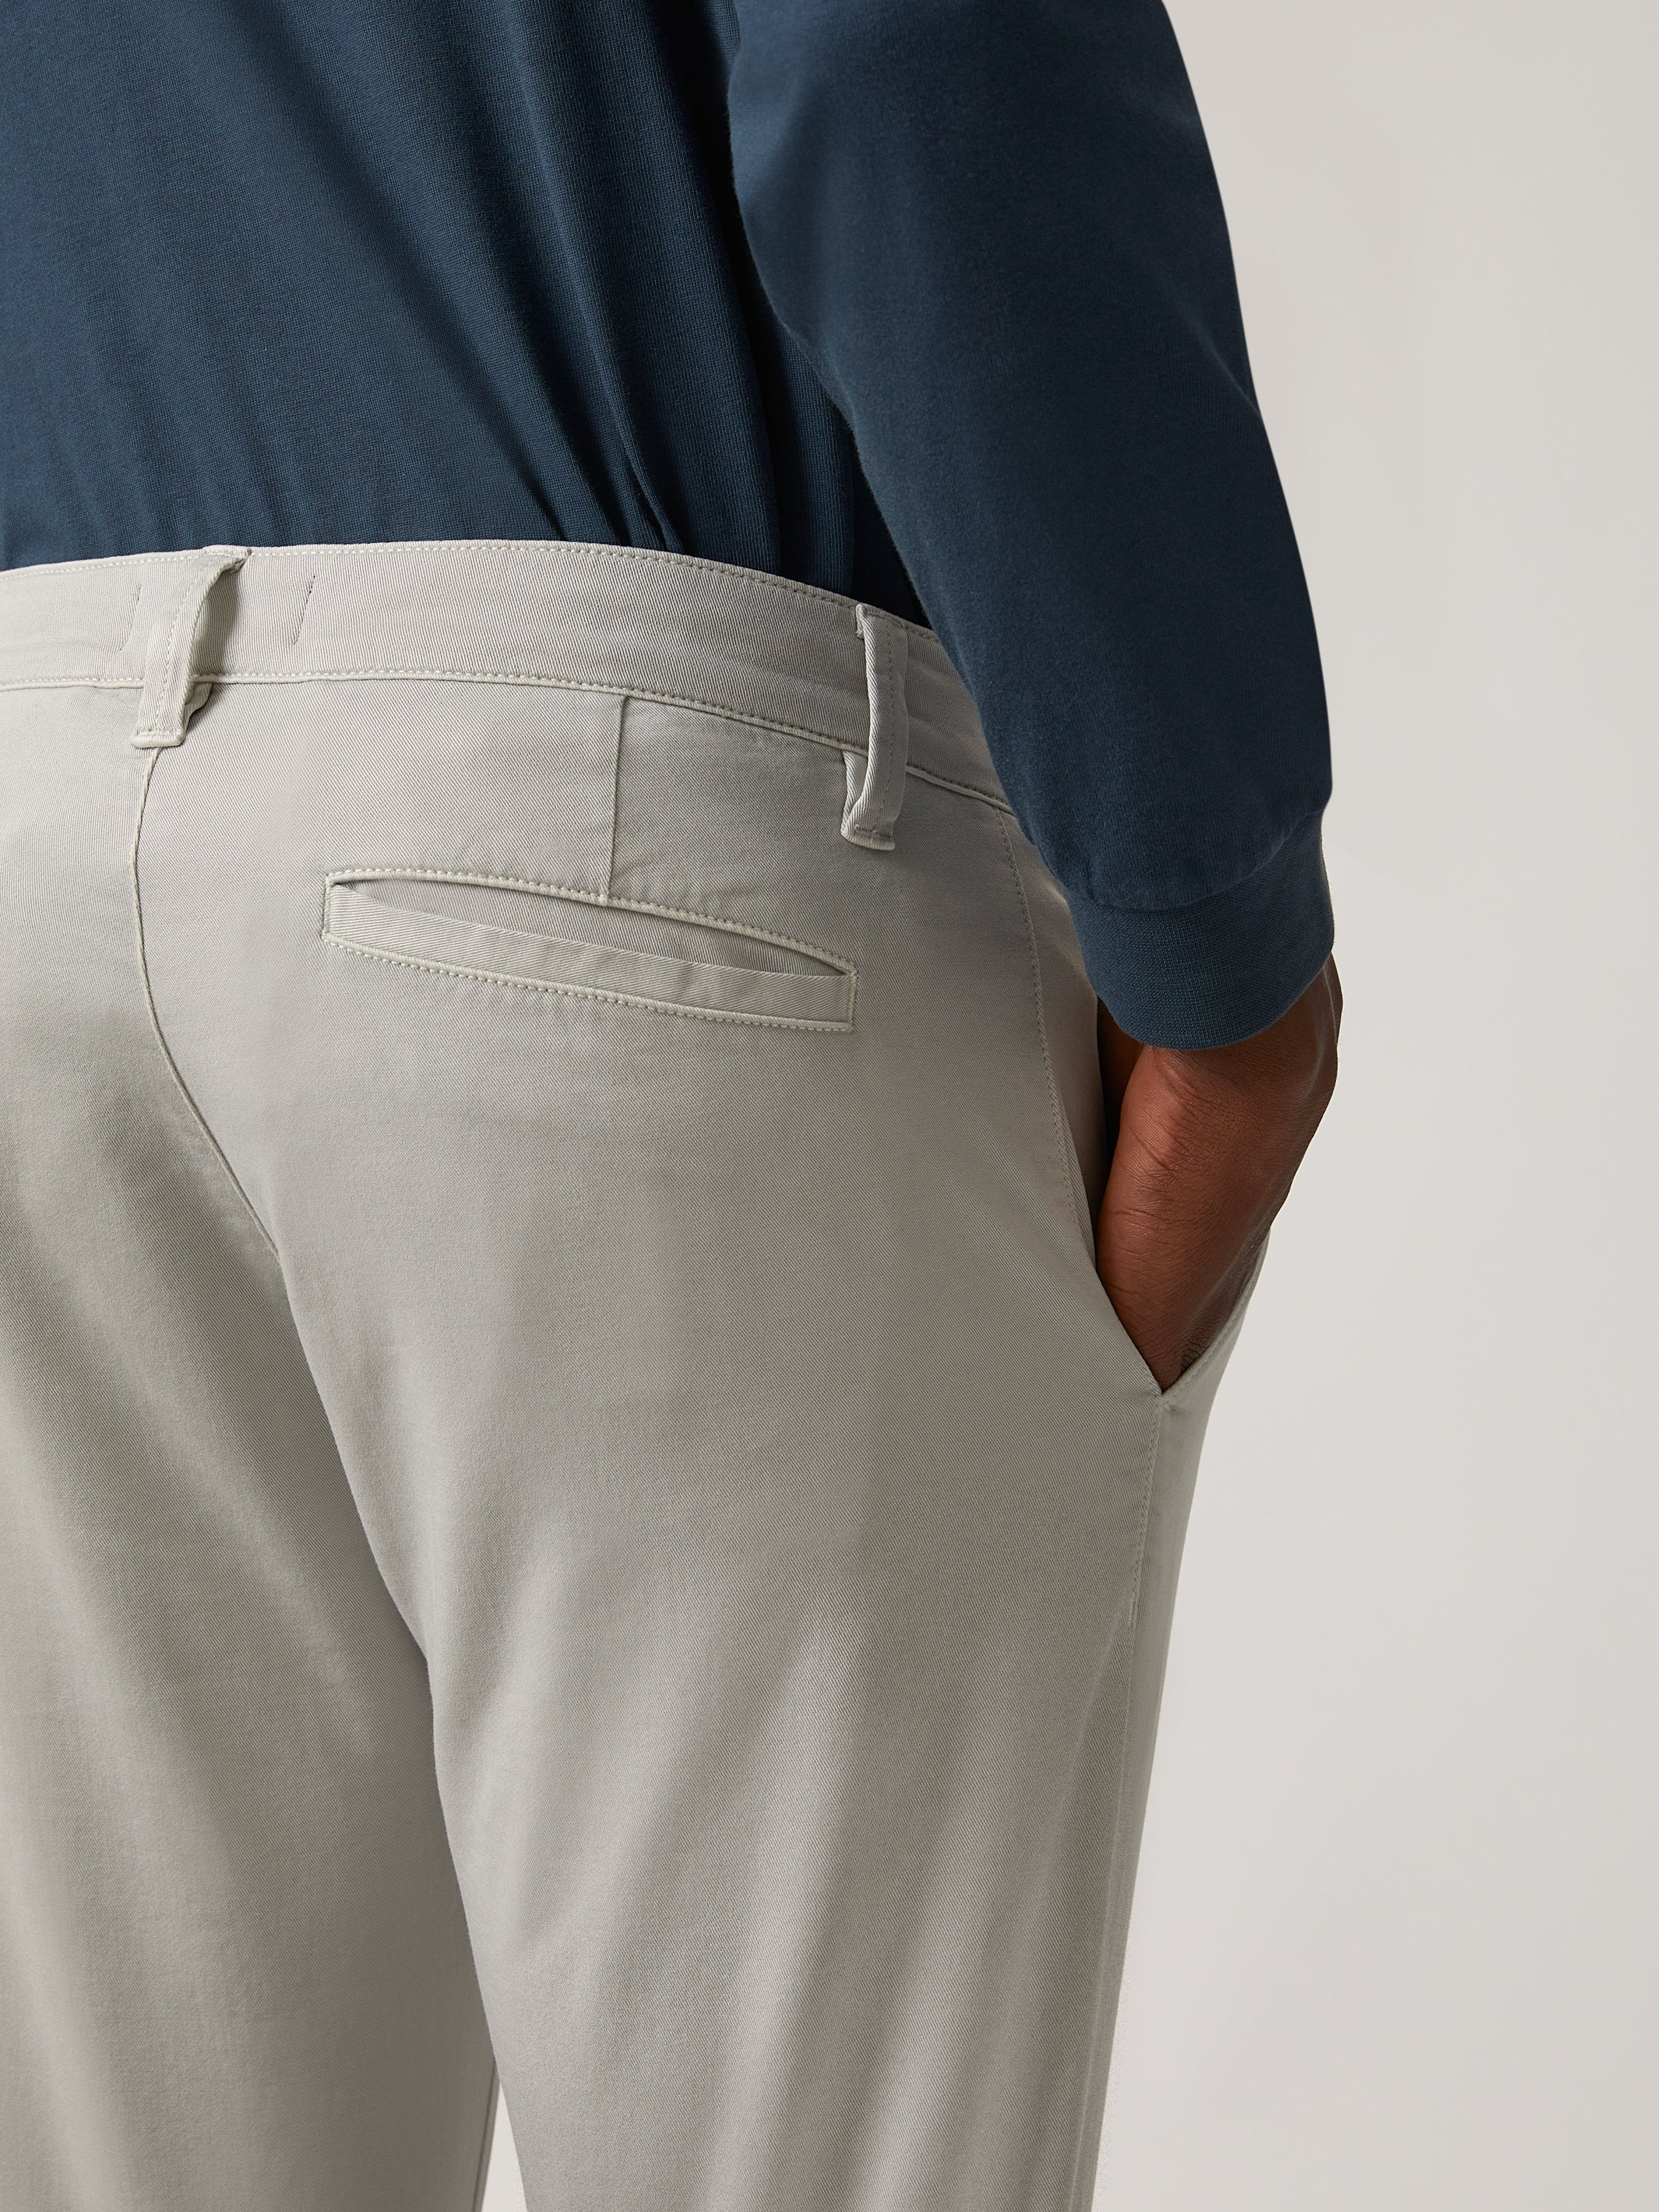 Men's Woven Pants in Gray Violet - BROOKLYN INDUSTRIES